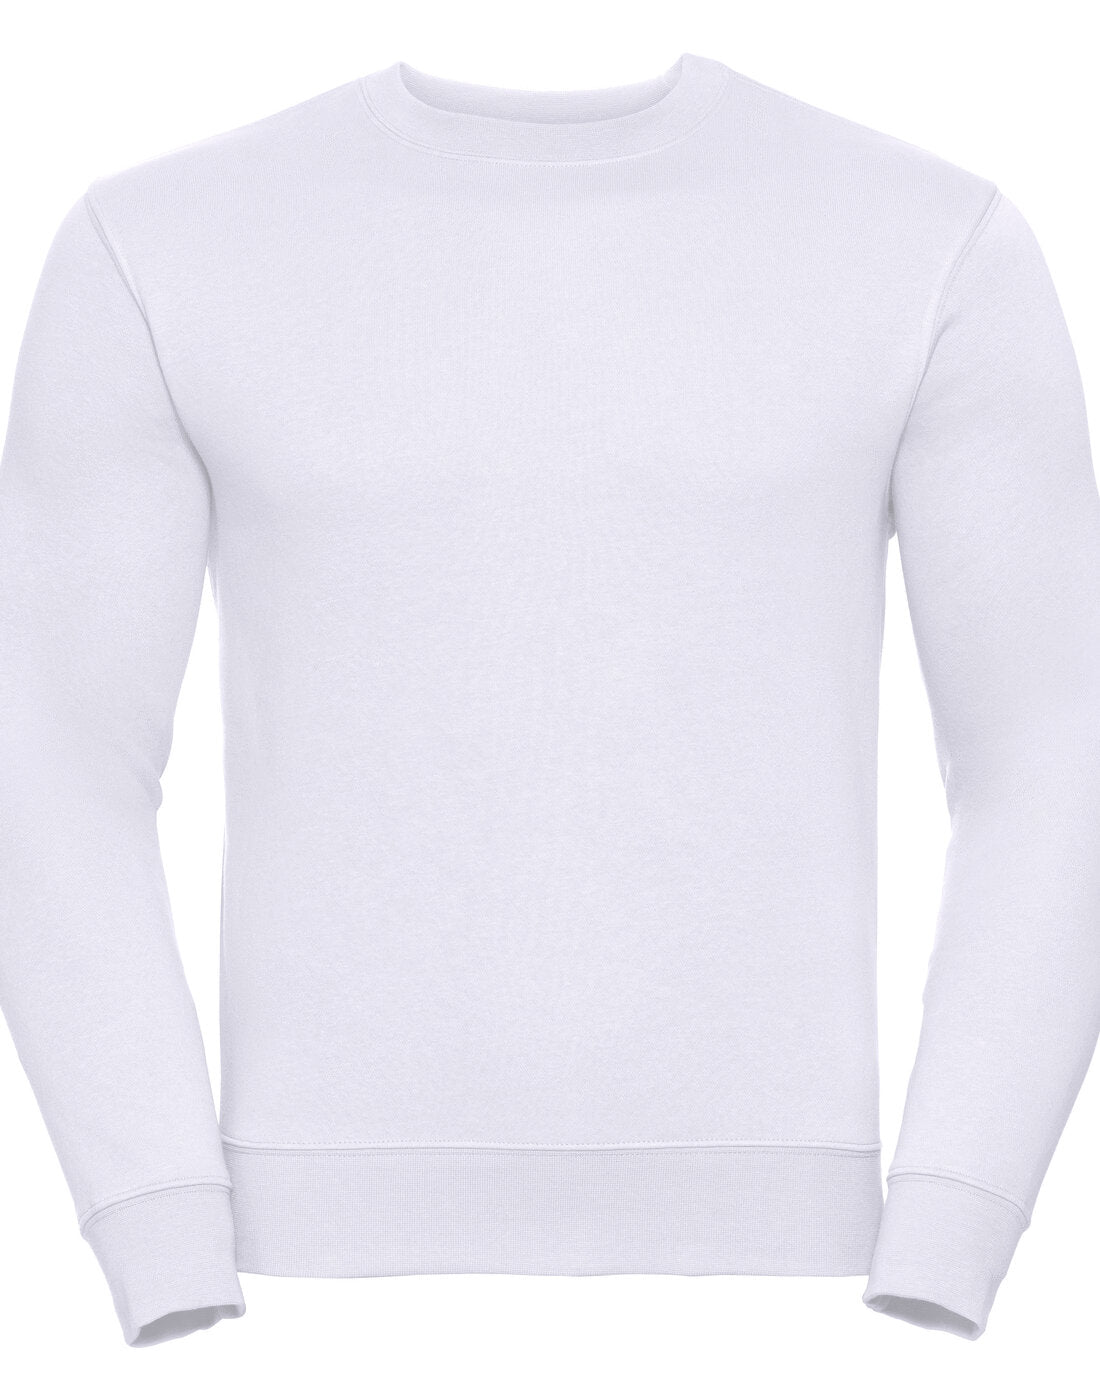 Russell Authentic Sweatshirt White